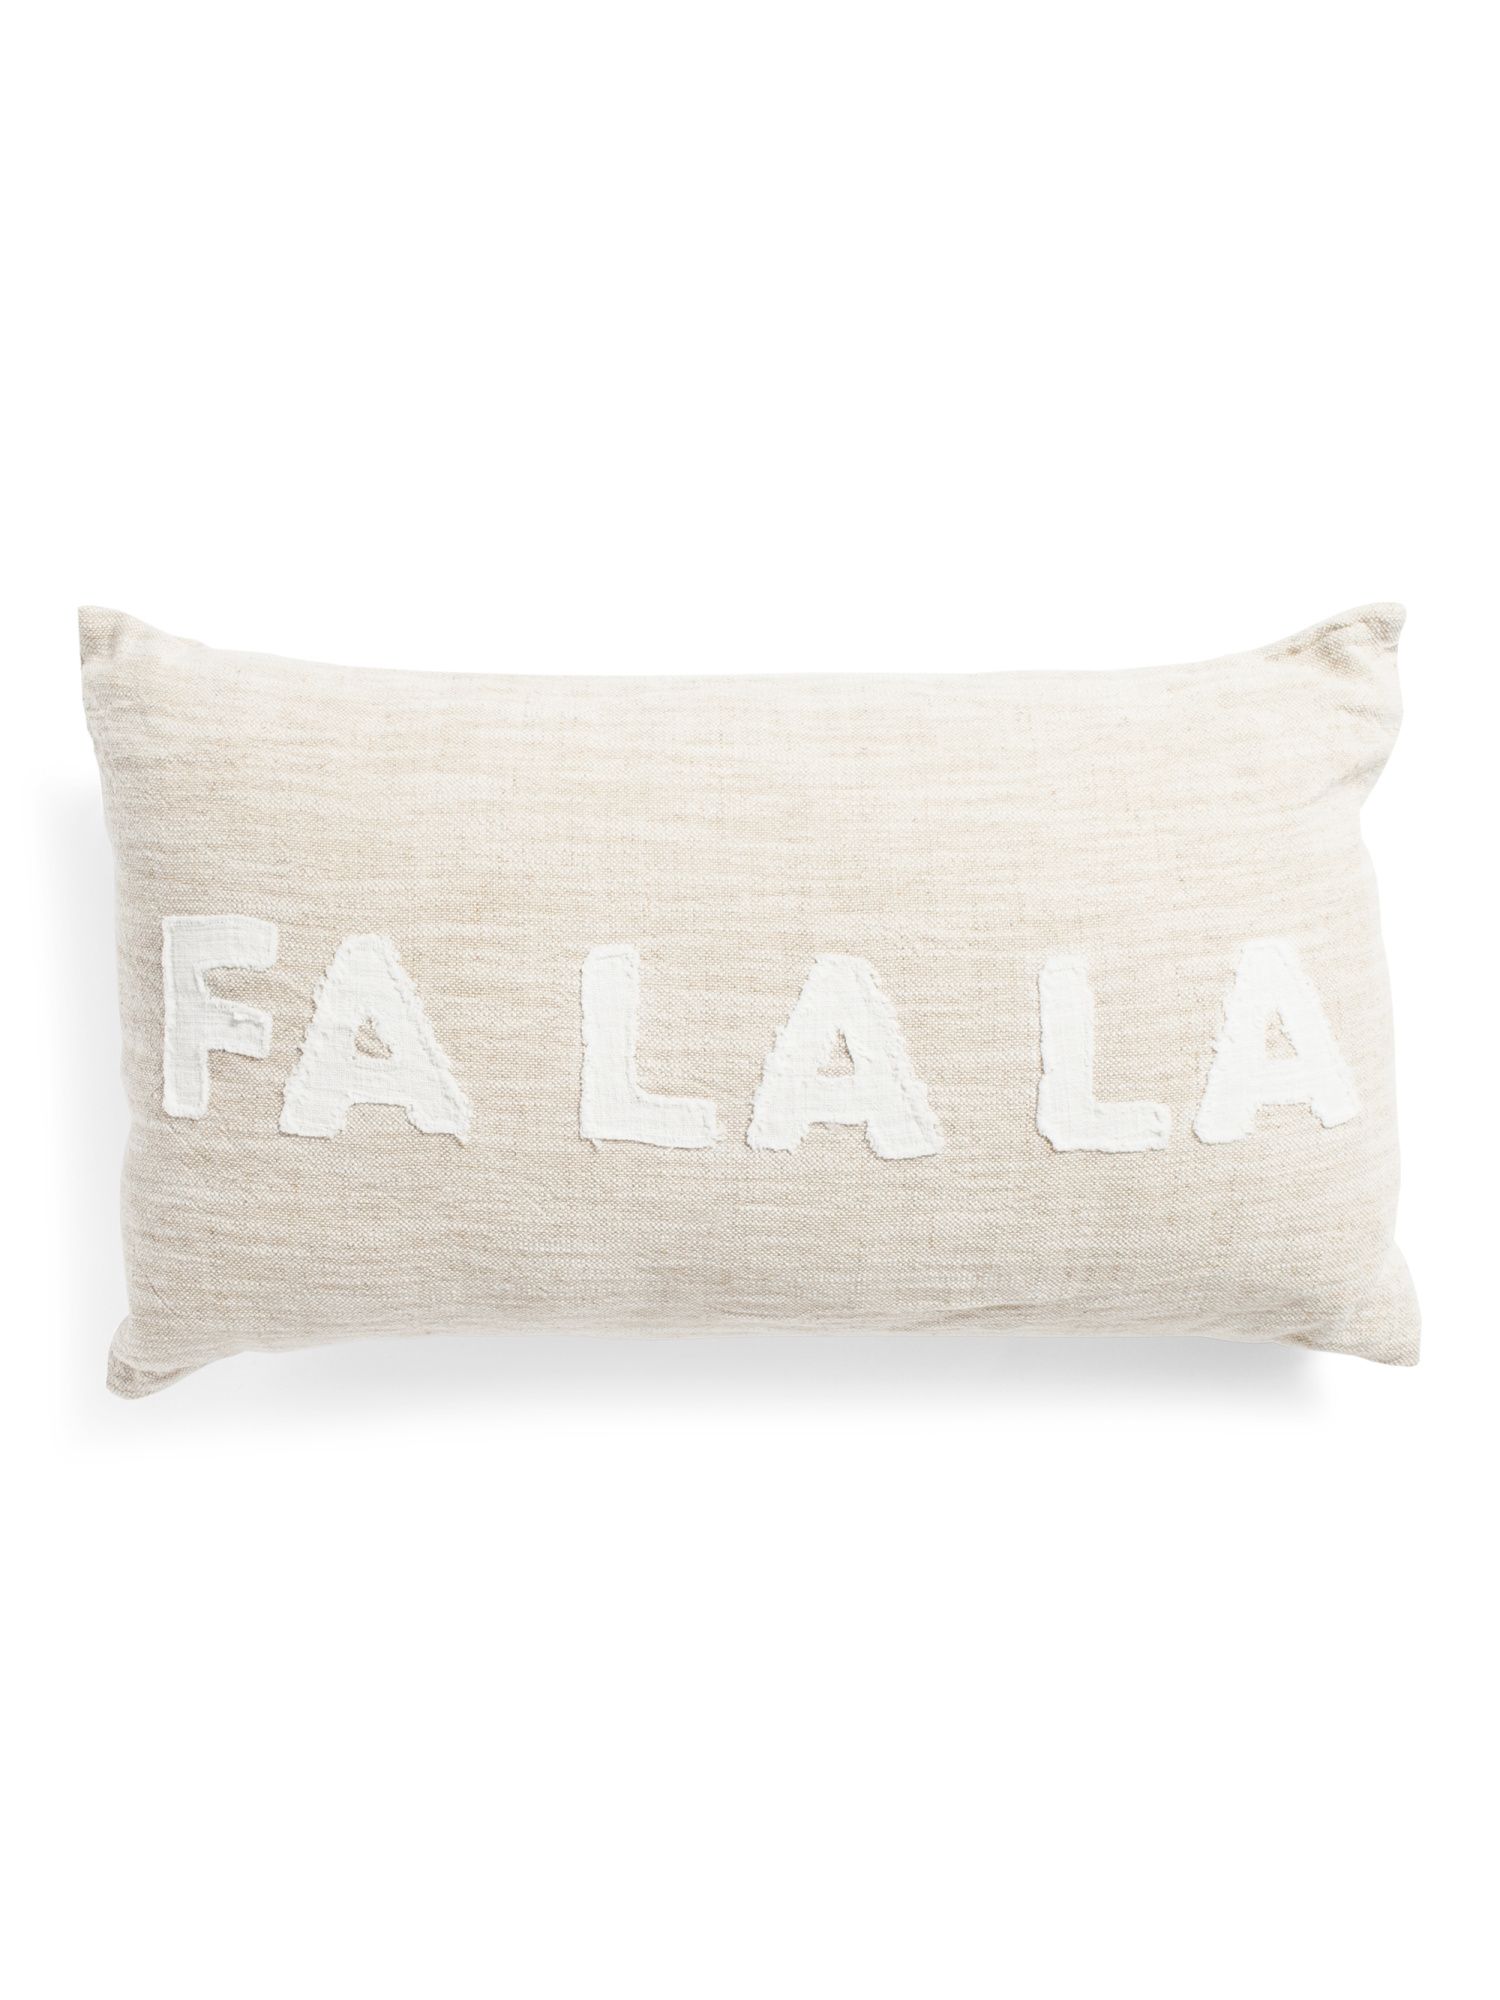 Made In India 14x24 Linen Falala Applique Pillow | TJ Maxx